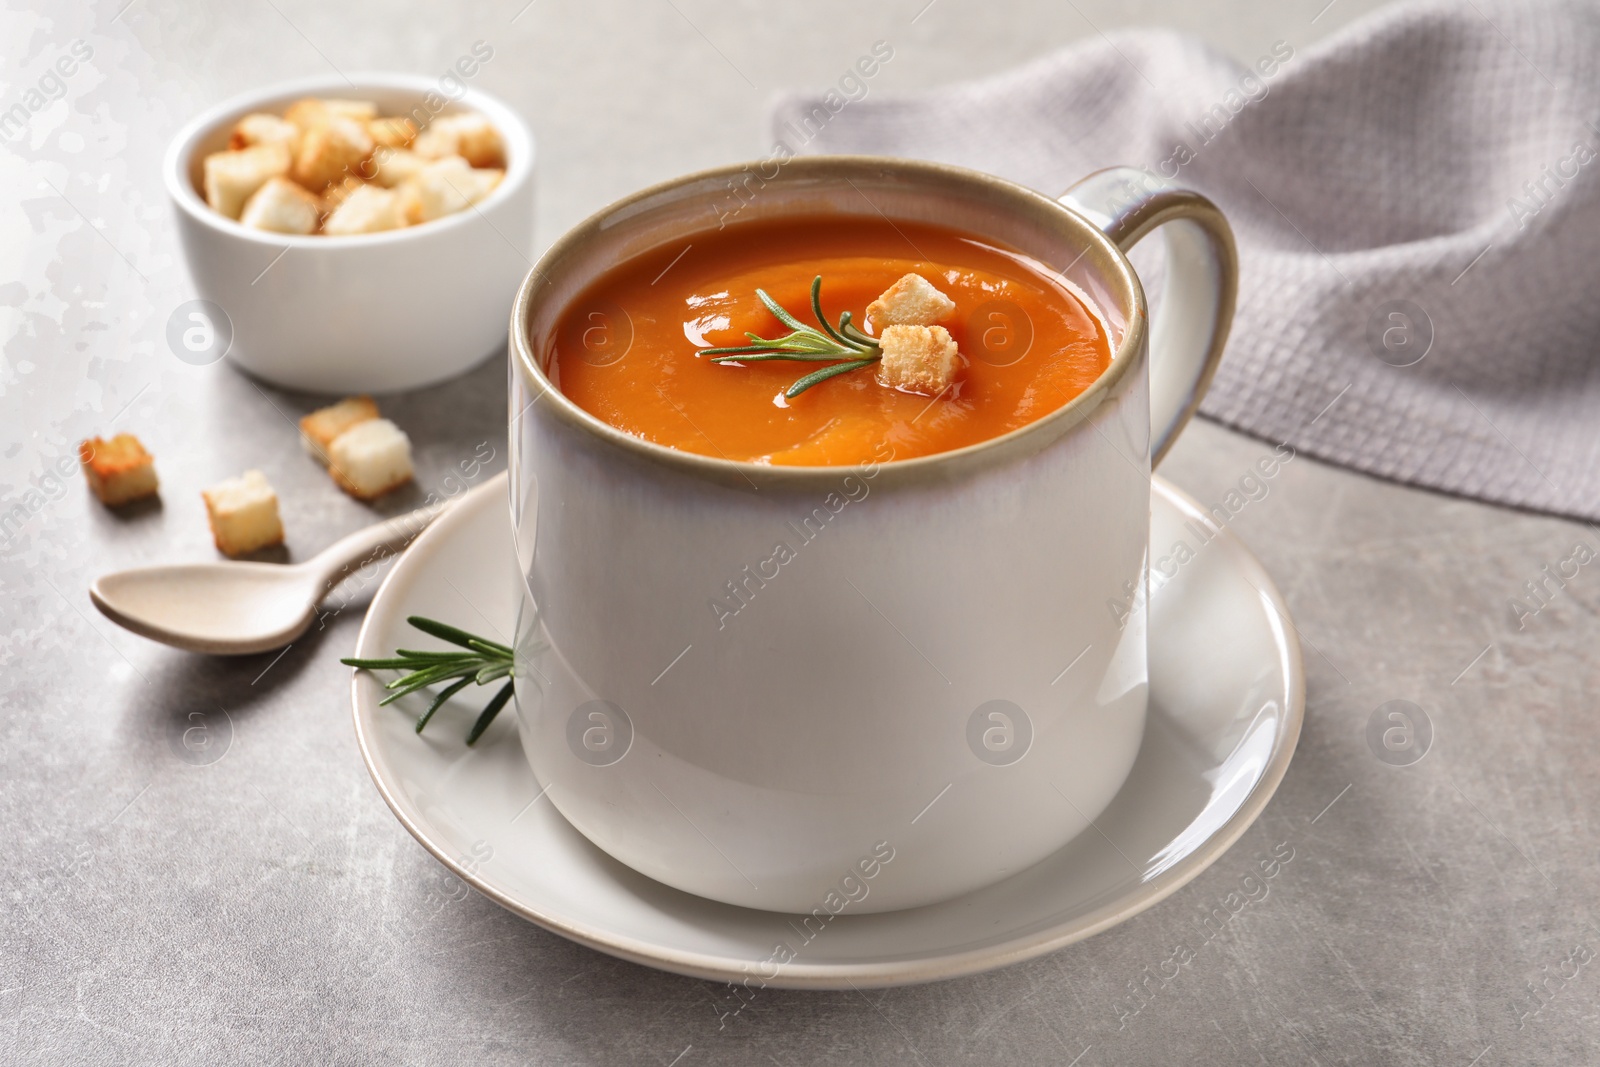 Photo of Mug of tasty sweet potato soup served on table